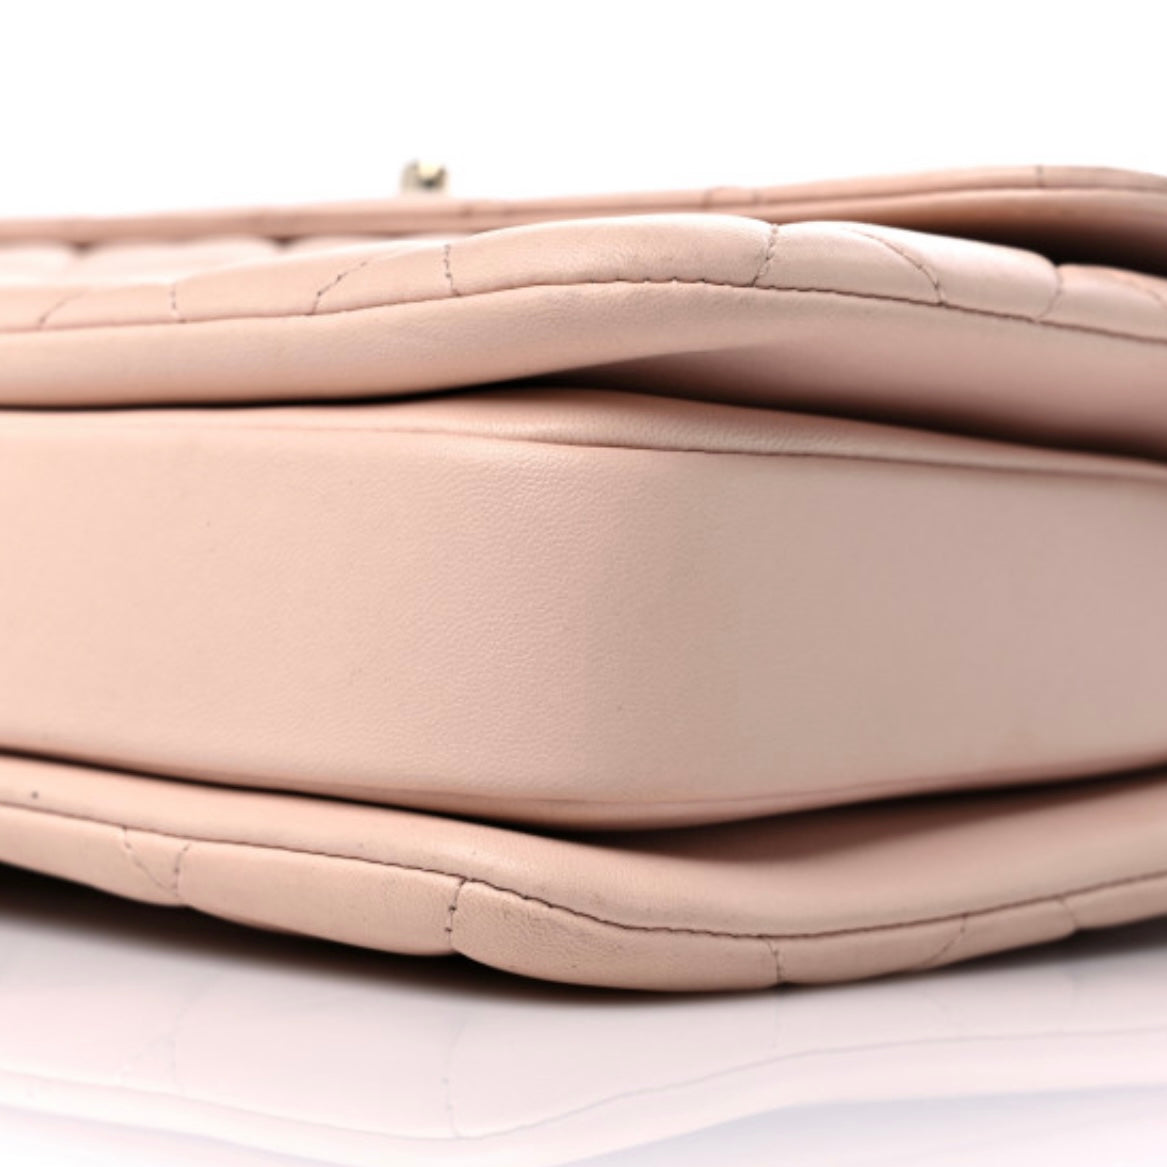 Chanel Lambskin Quilted Medium Trendy CC Flap Dual Handle Bag Beige -  MyDesignerly